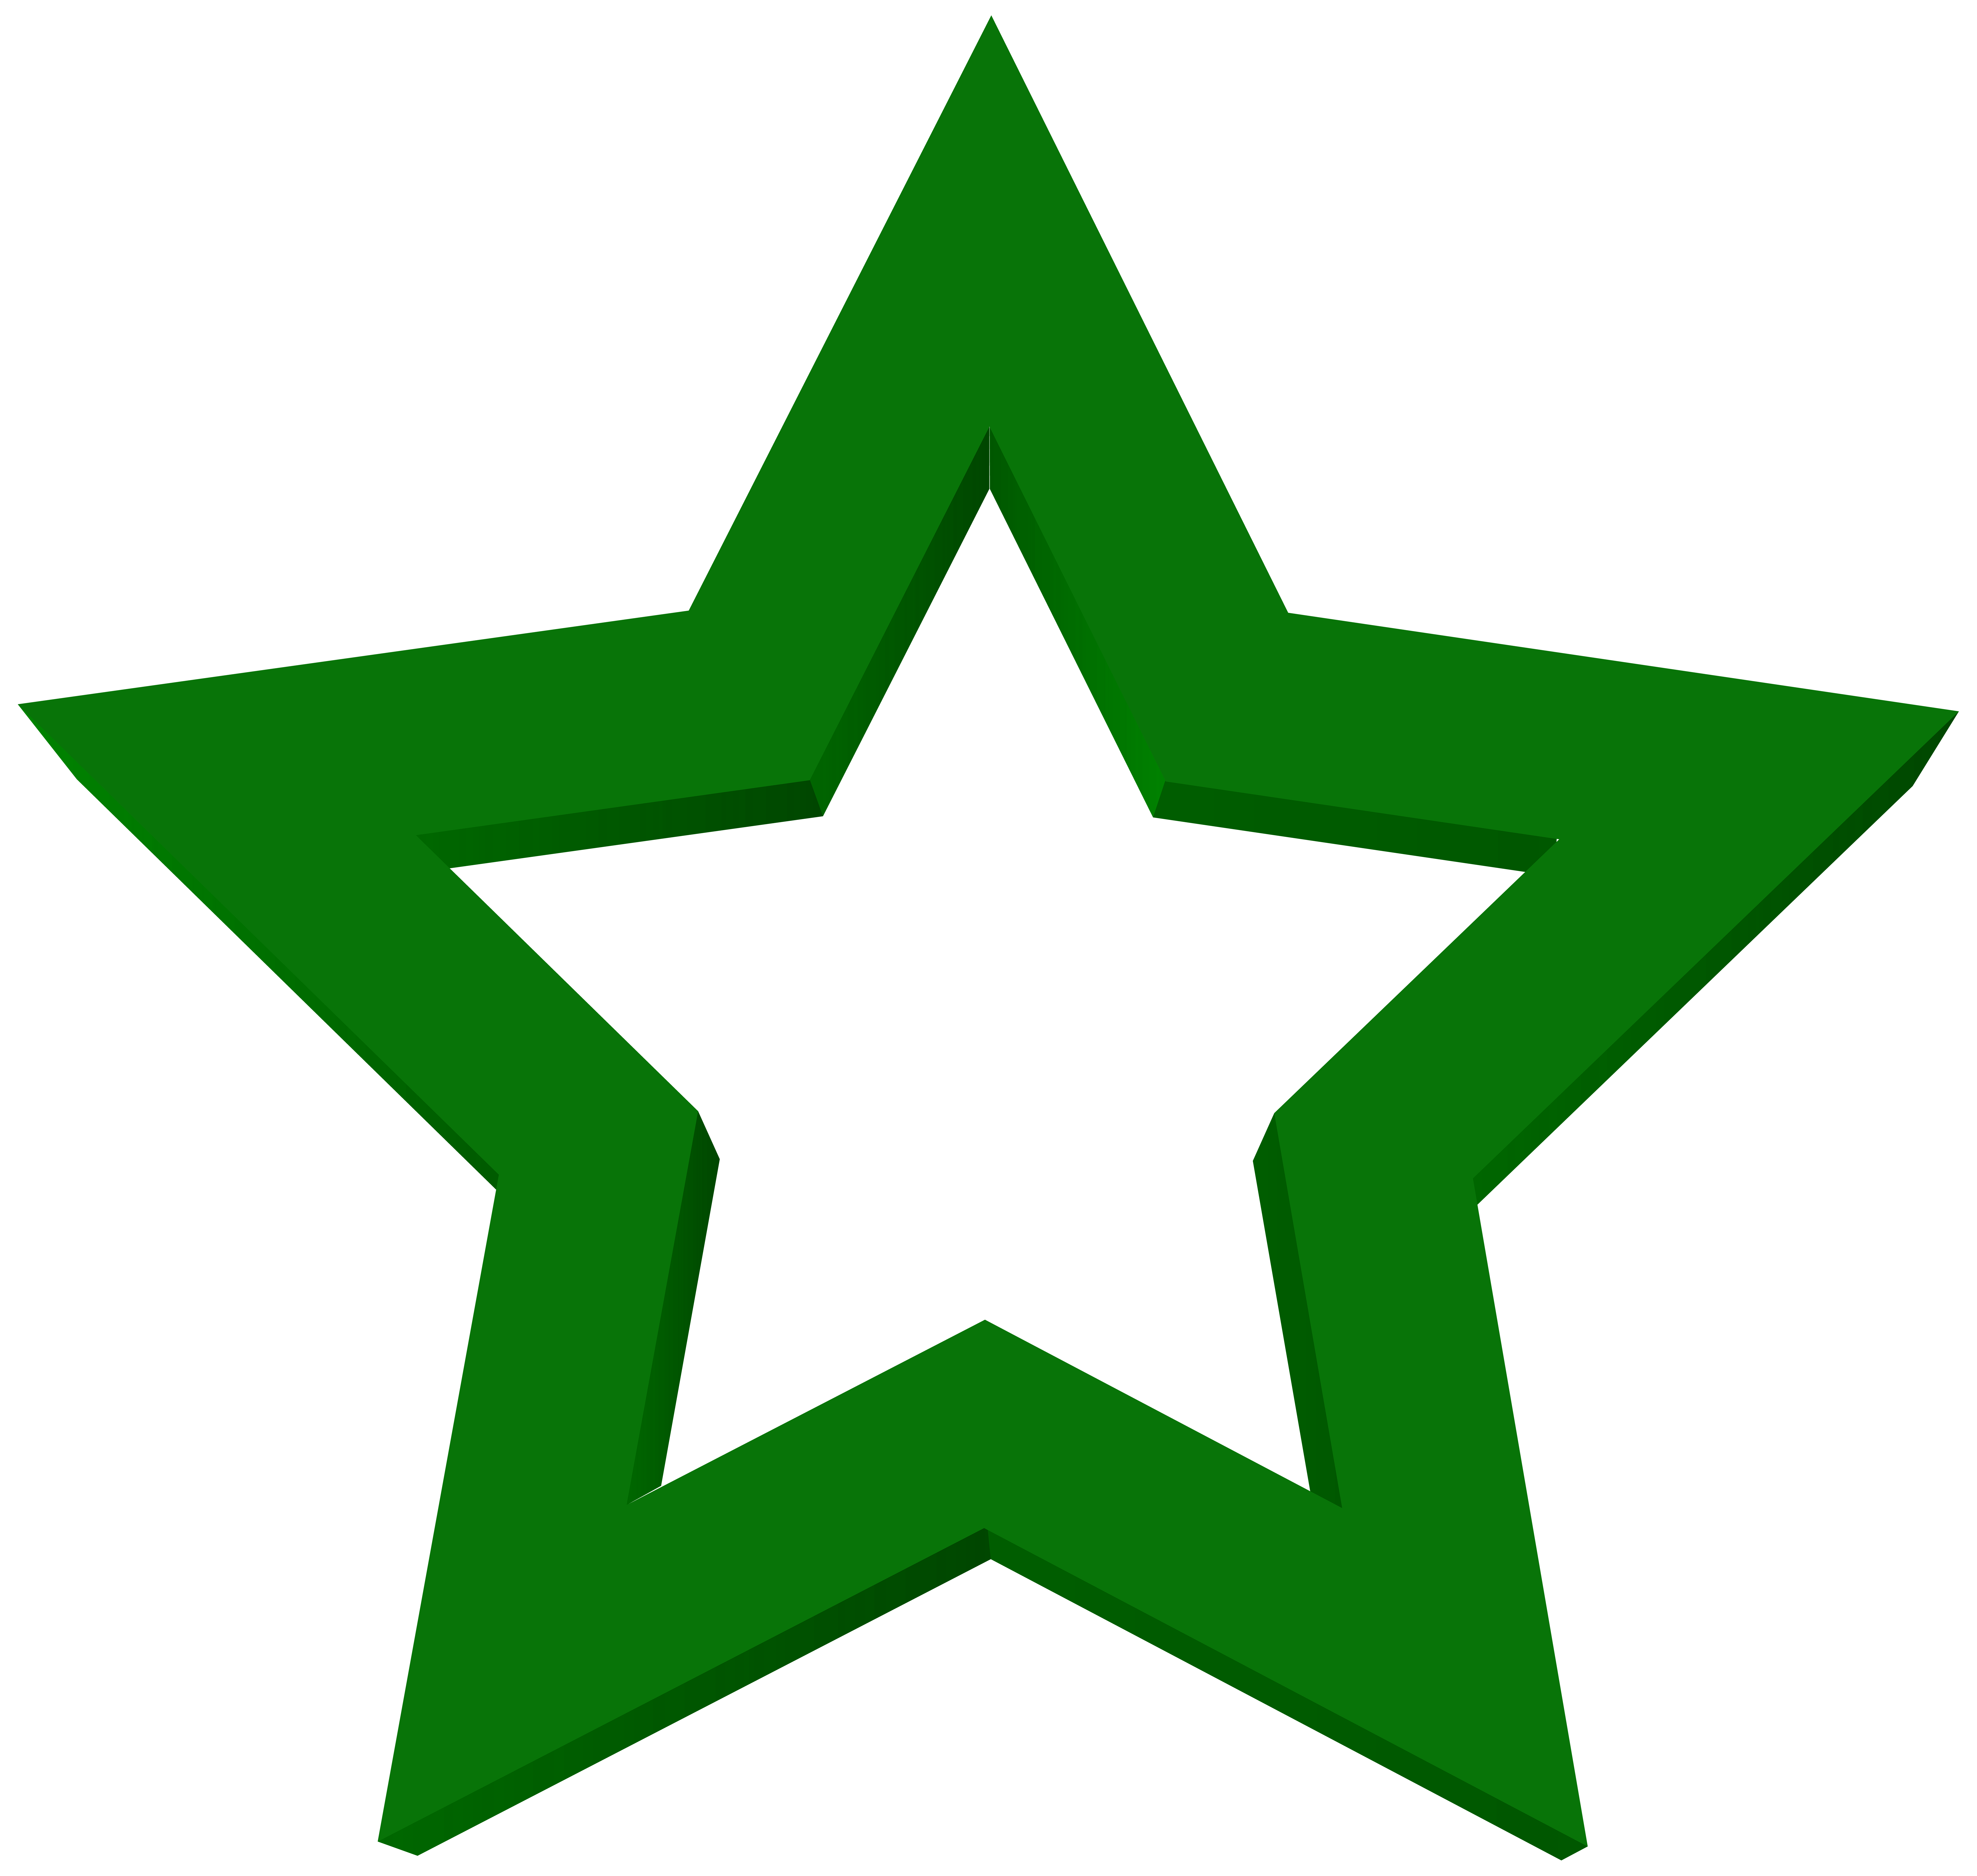 green star background clip art